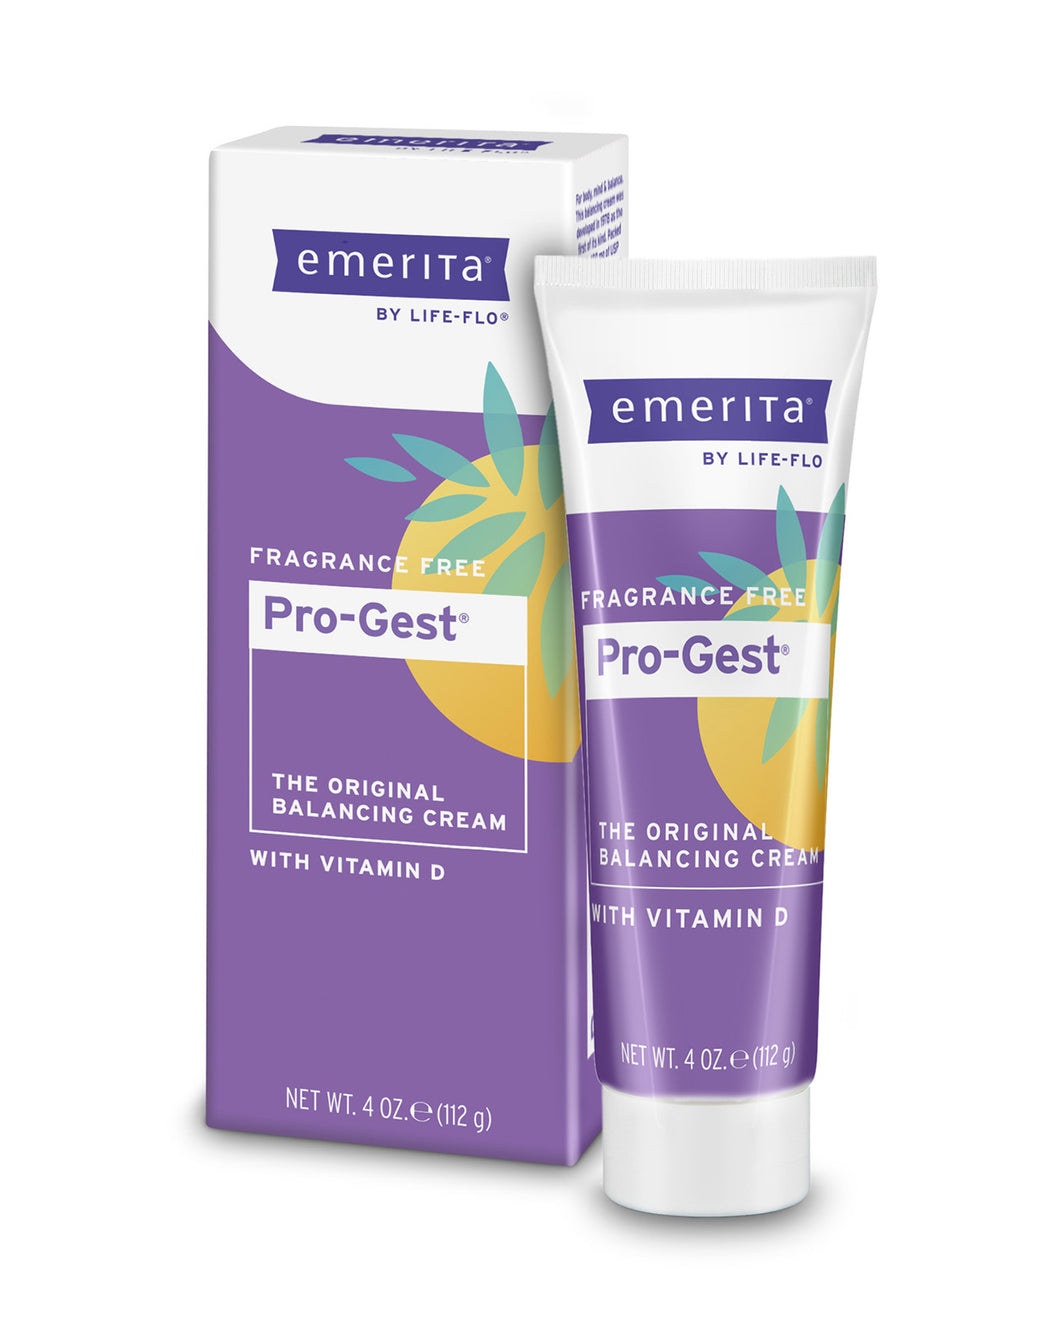 Pro-Gest Balancing Cream with Vitamin D3